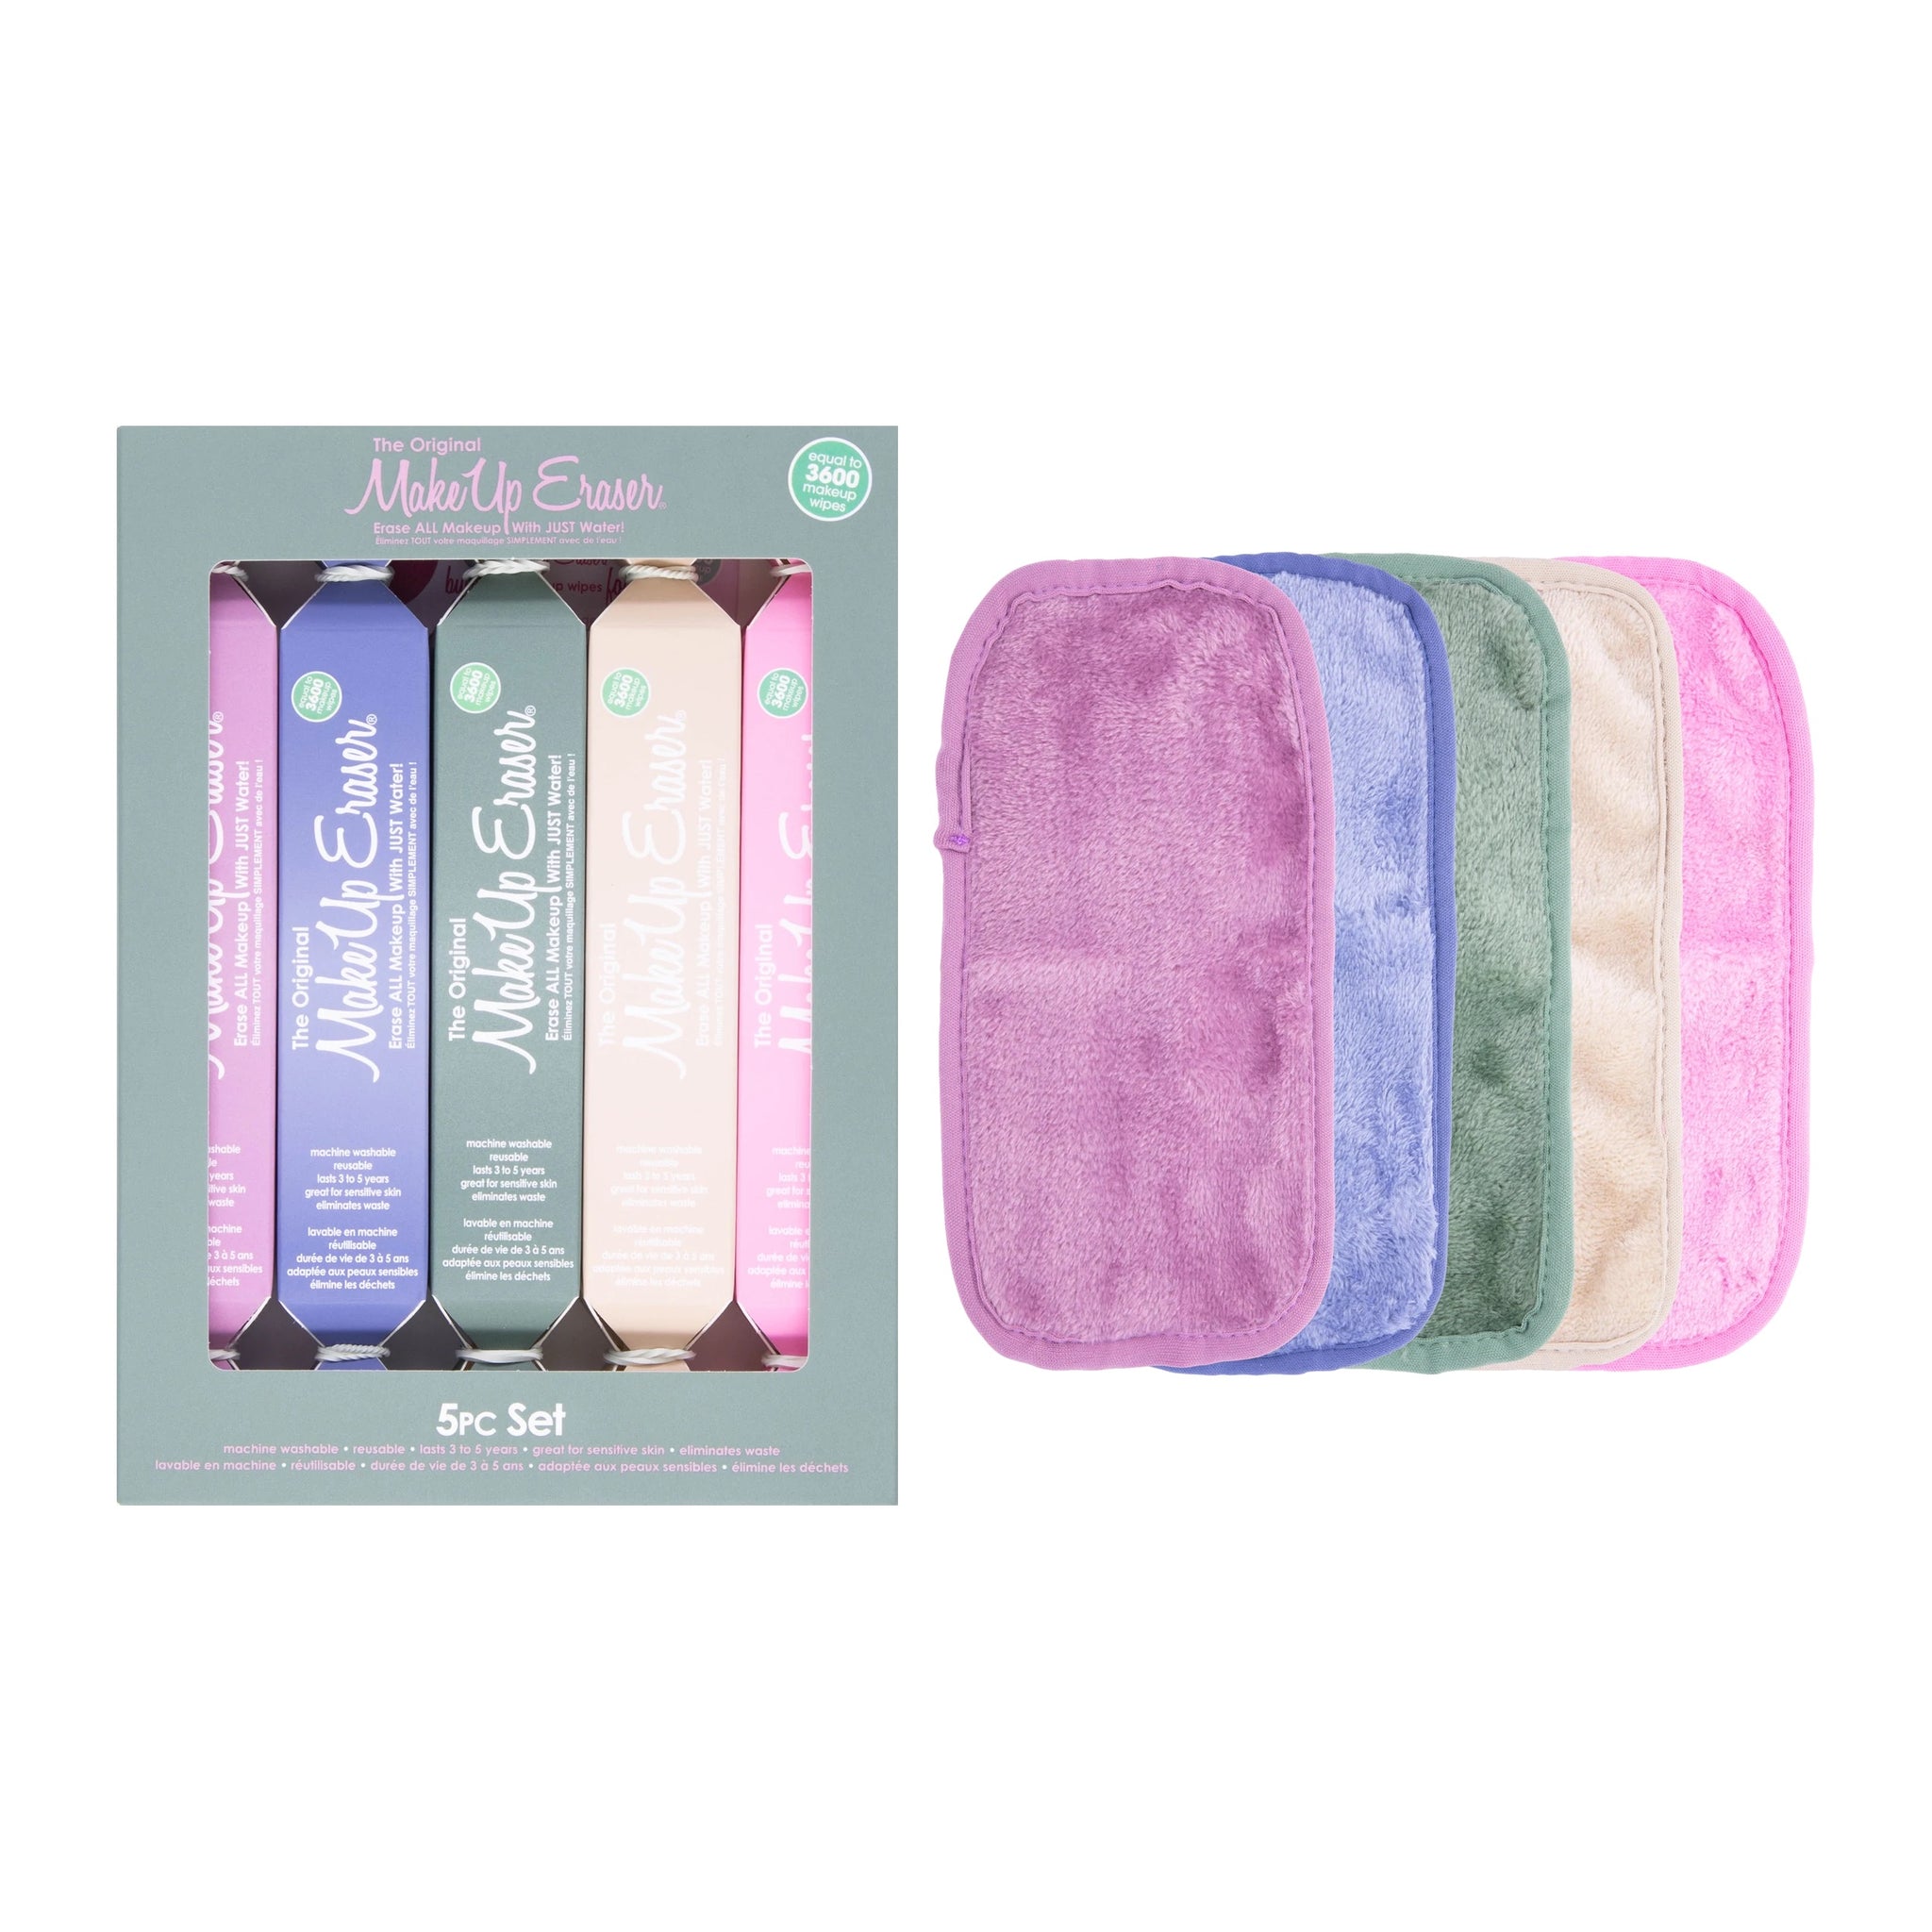 MakeUp Eraser 5-Day Set